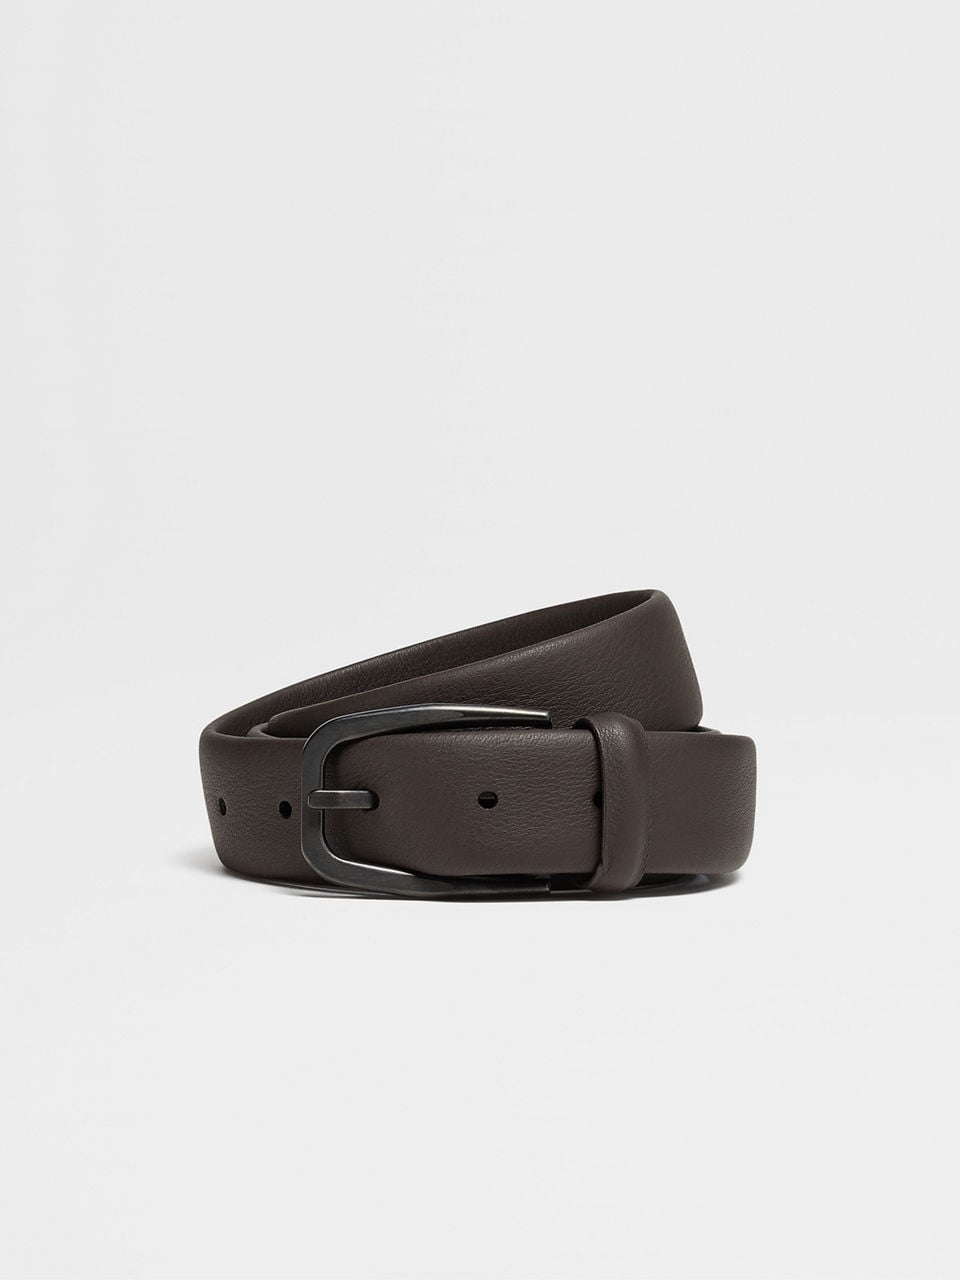 Zegna braided leather belt - Black